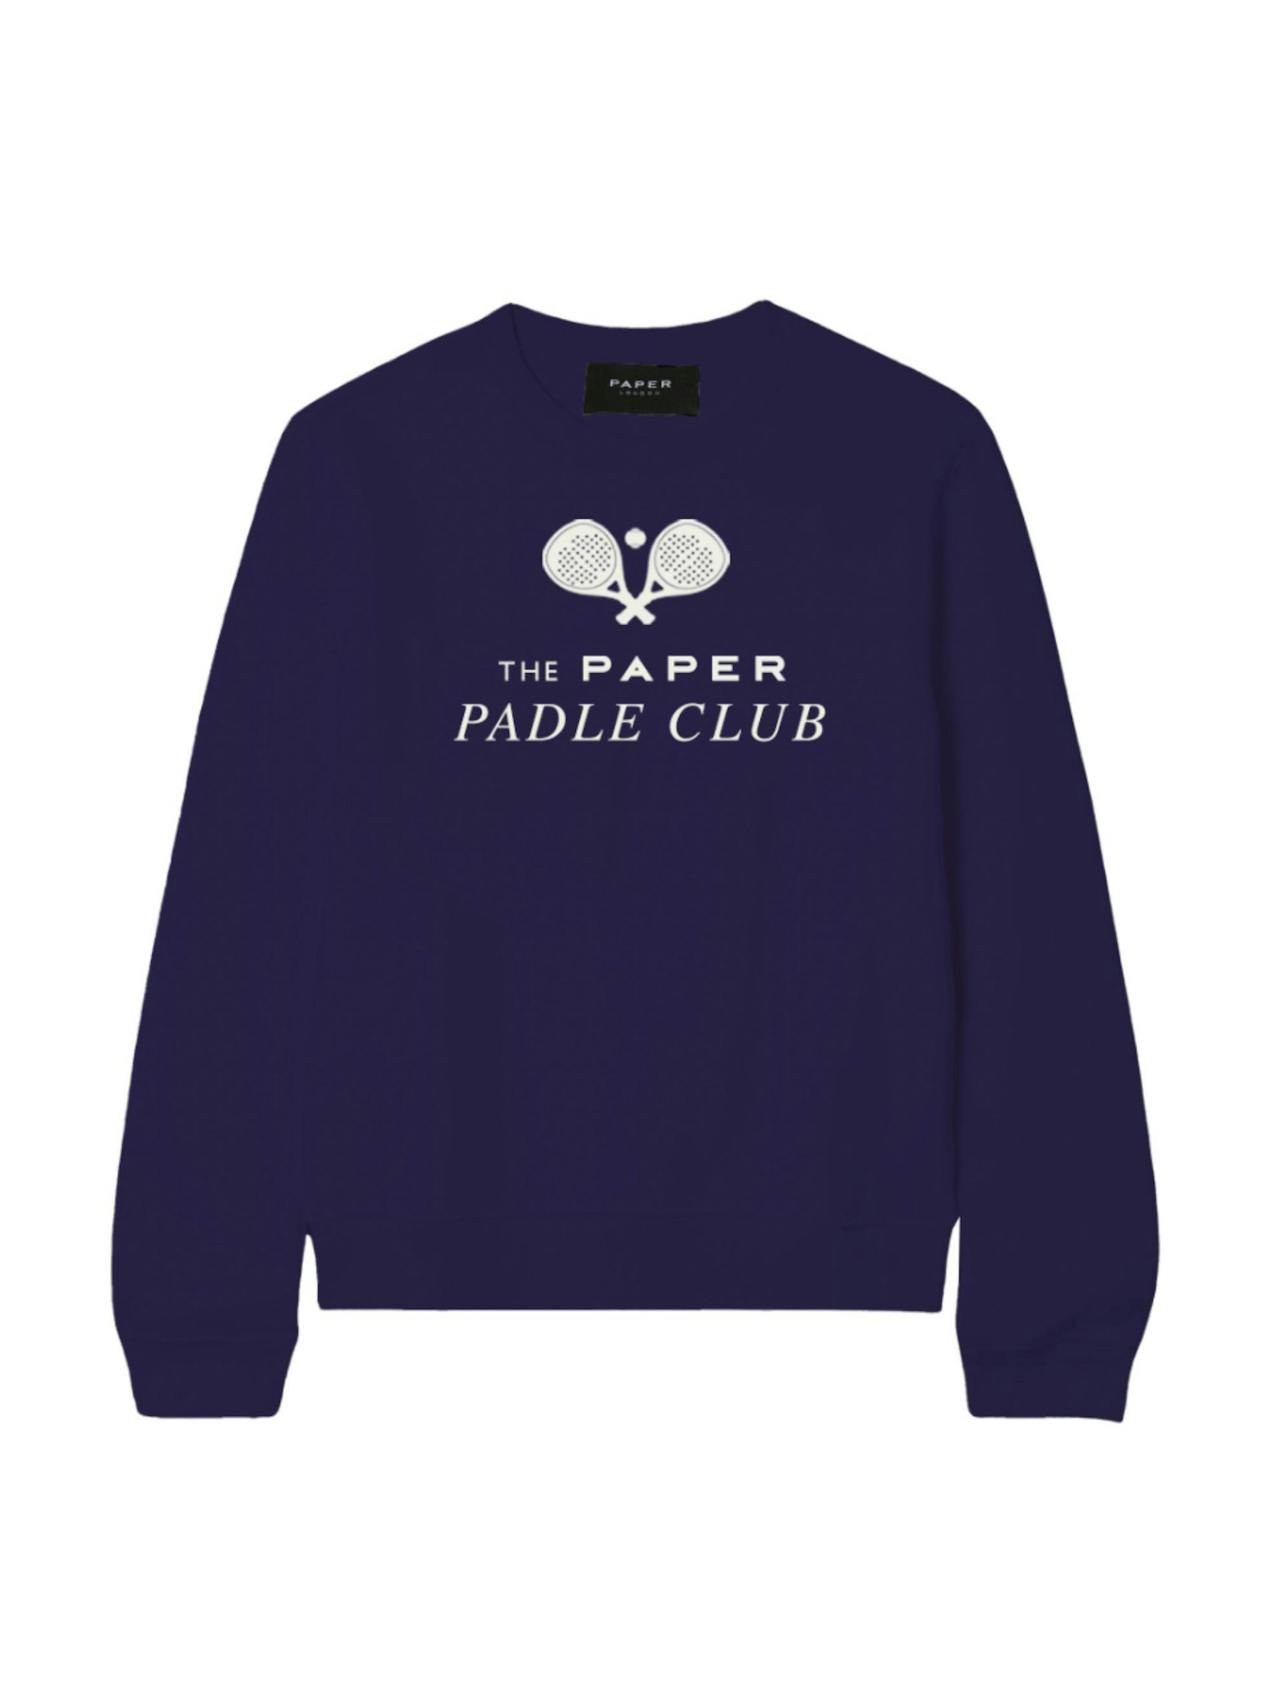 Padel club sweatshirt